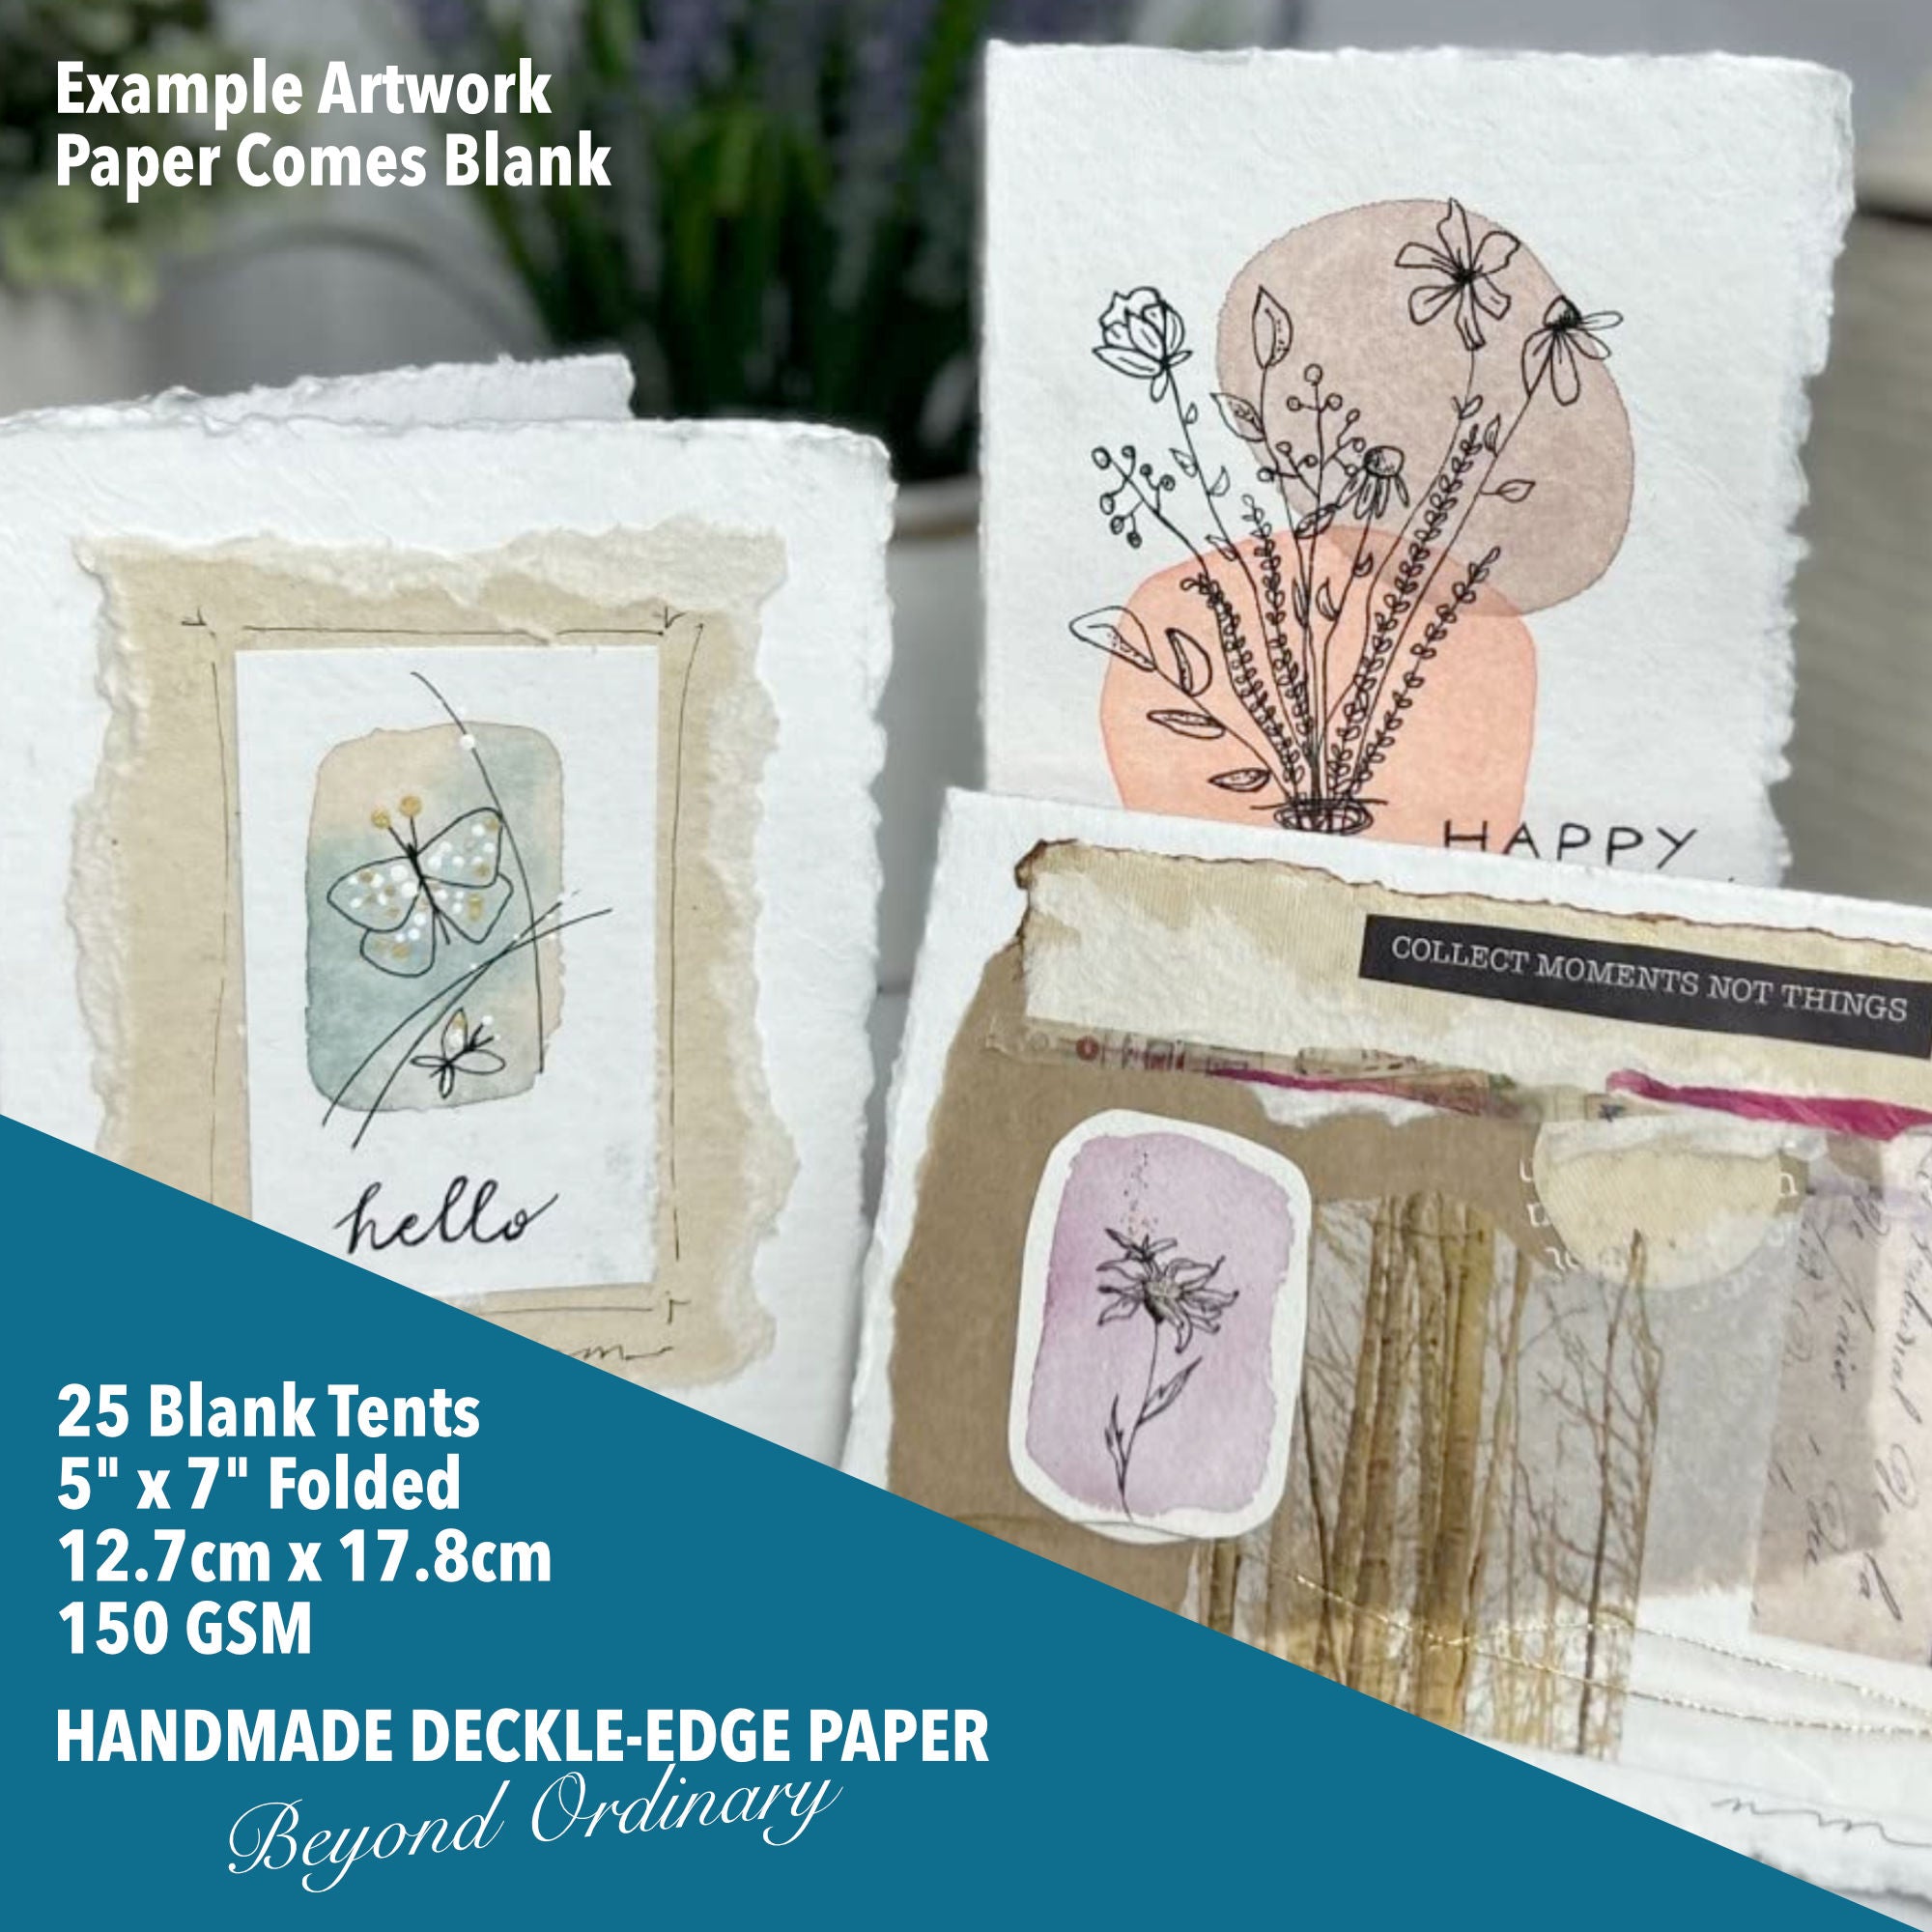 8x10 WHITE 150 Gsm Handmade Paper Deckled Edge Cotton Paper Deckle